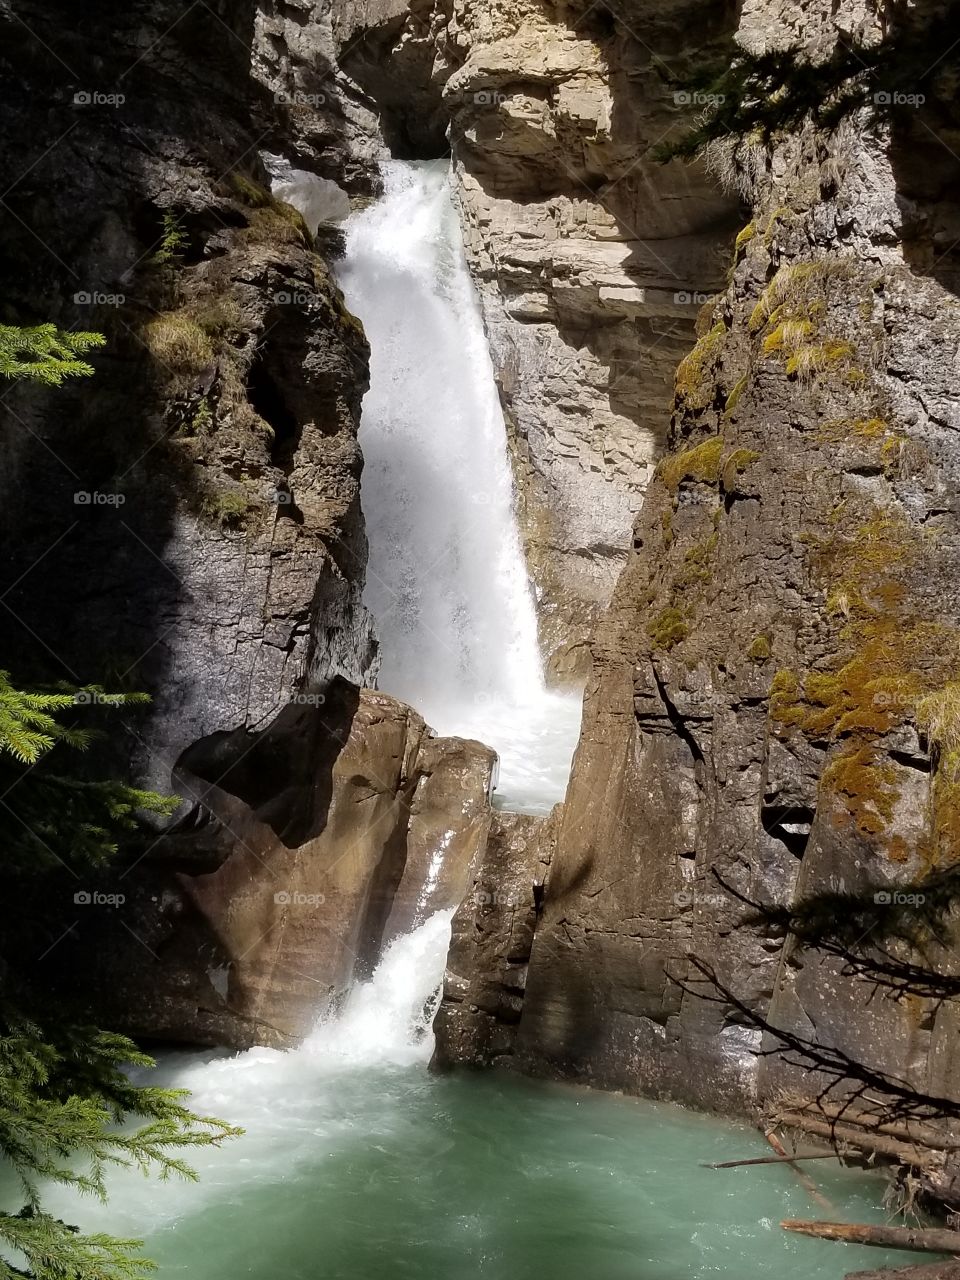 Beneath the falls